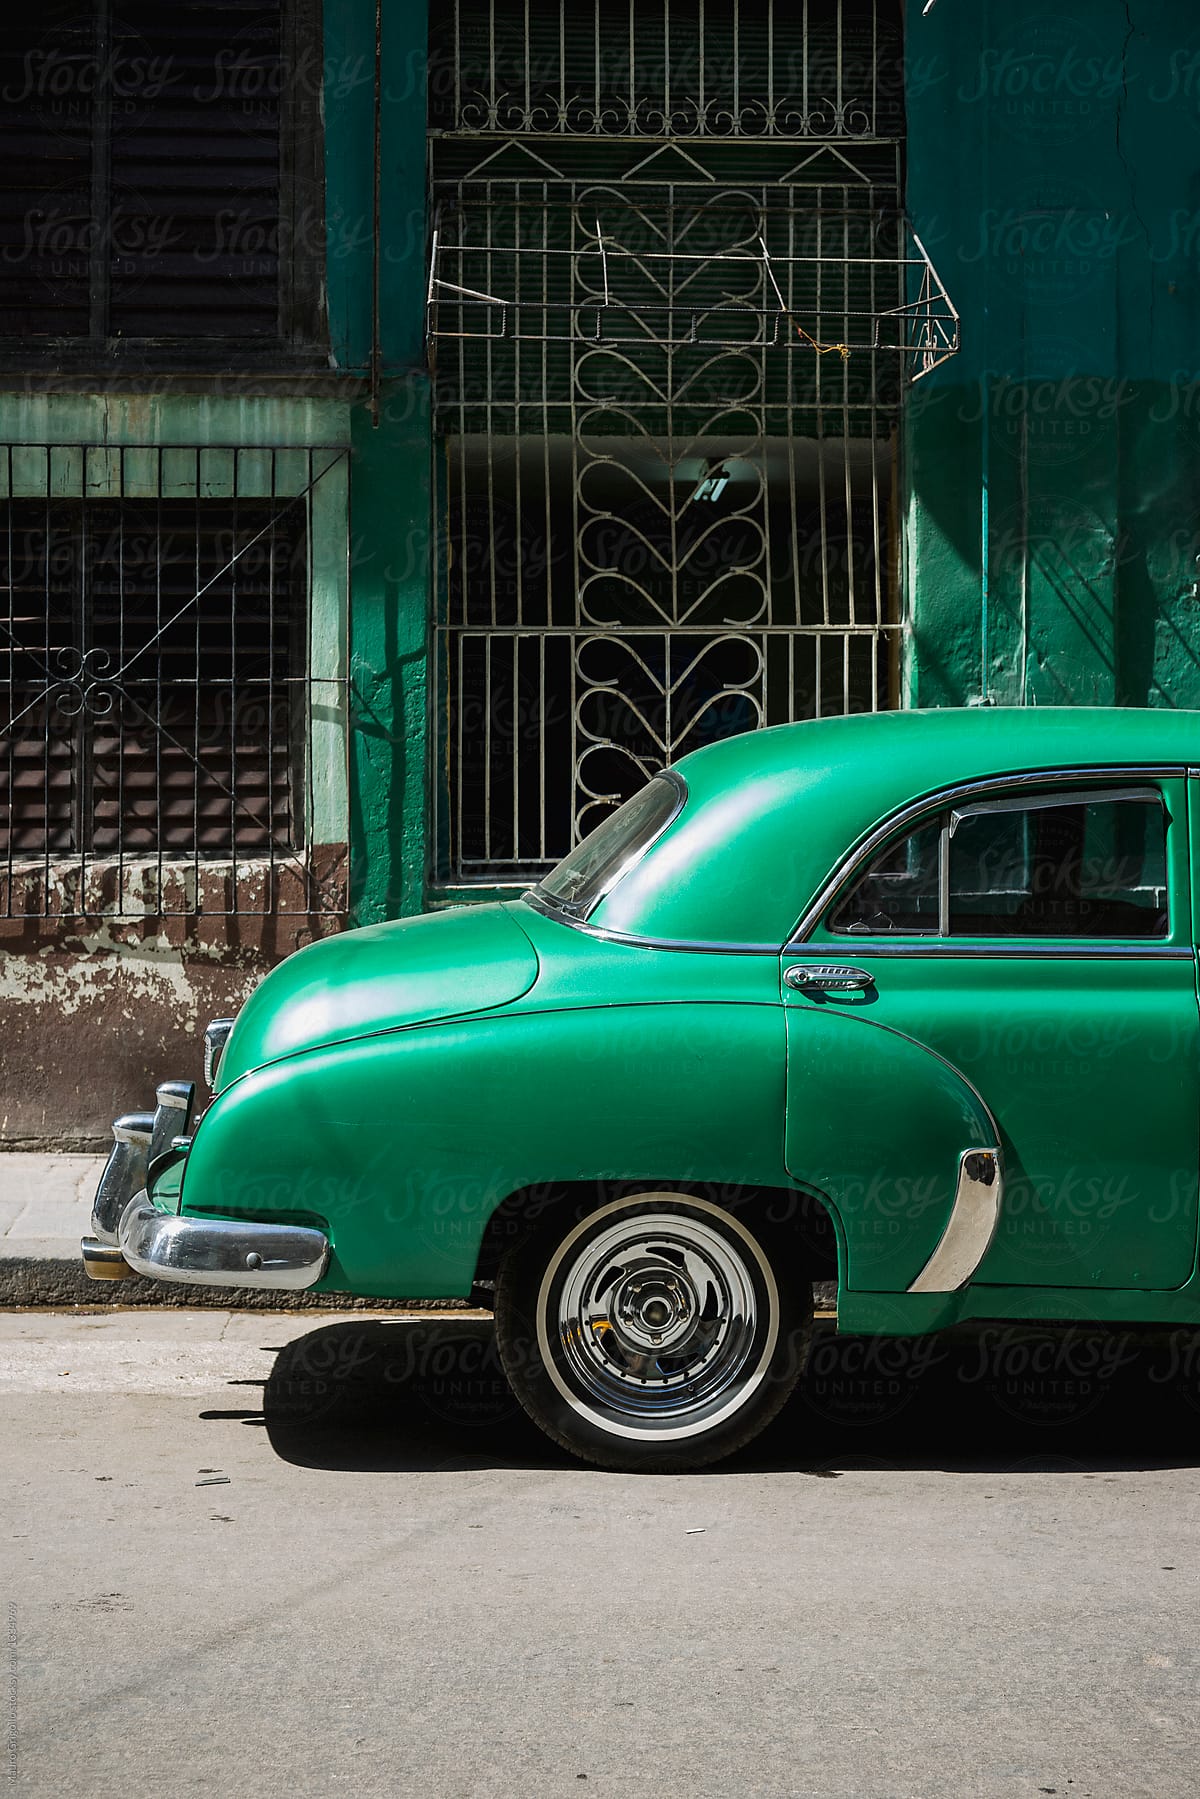 Vintage American car in Cuba